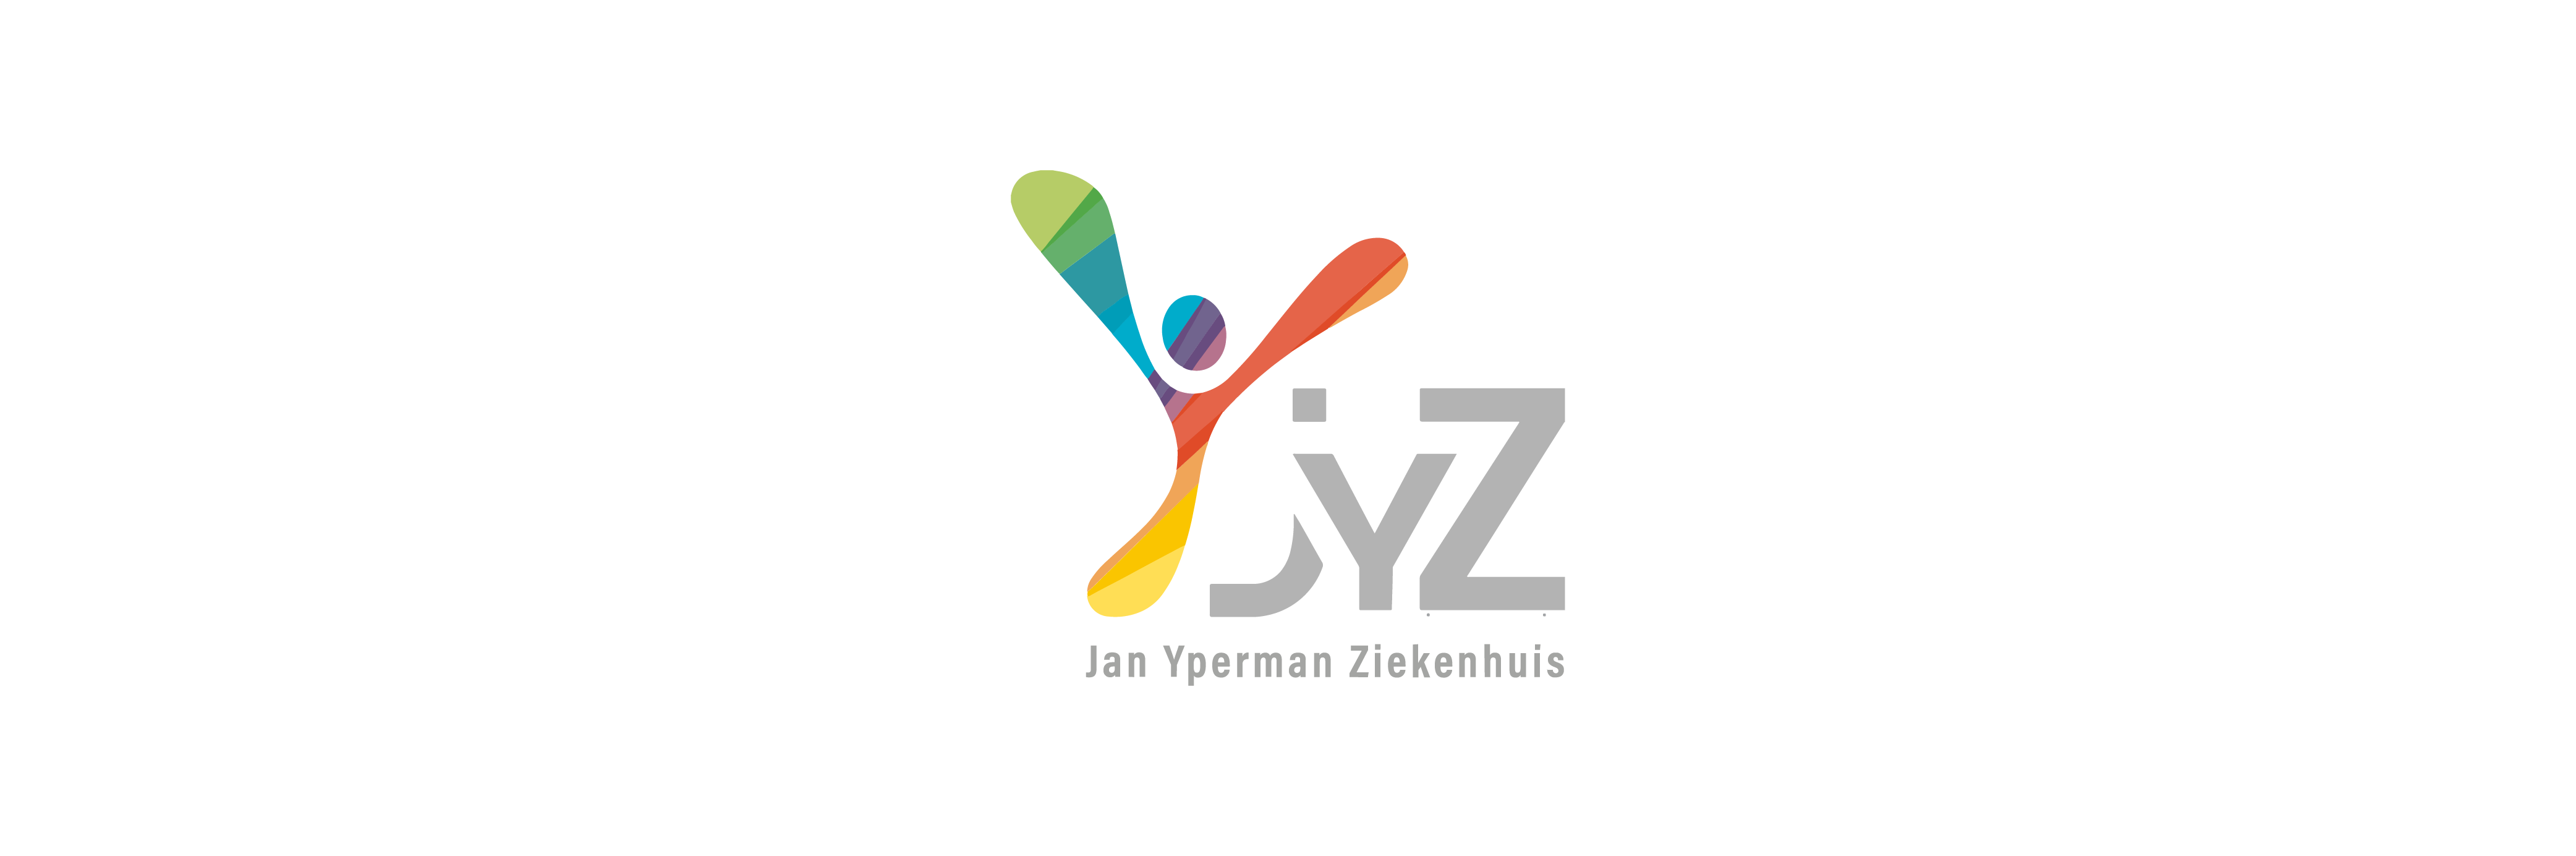 partner-logos_Jan Yperman-1